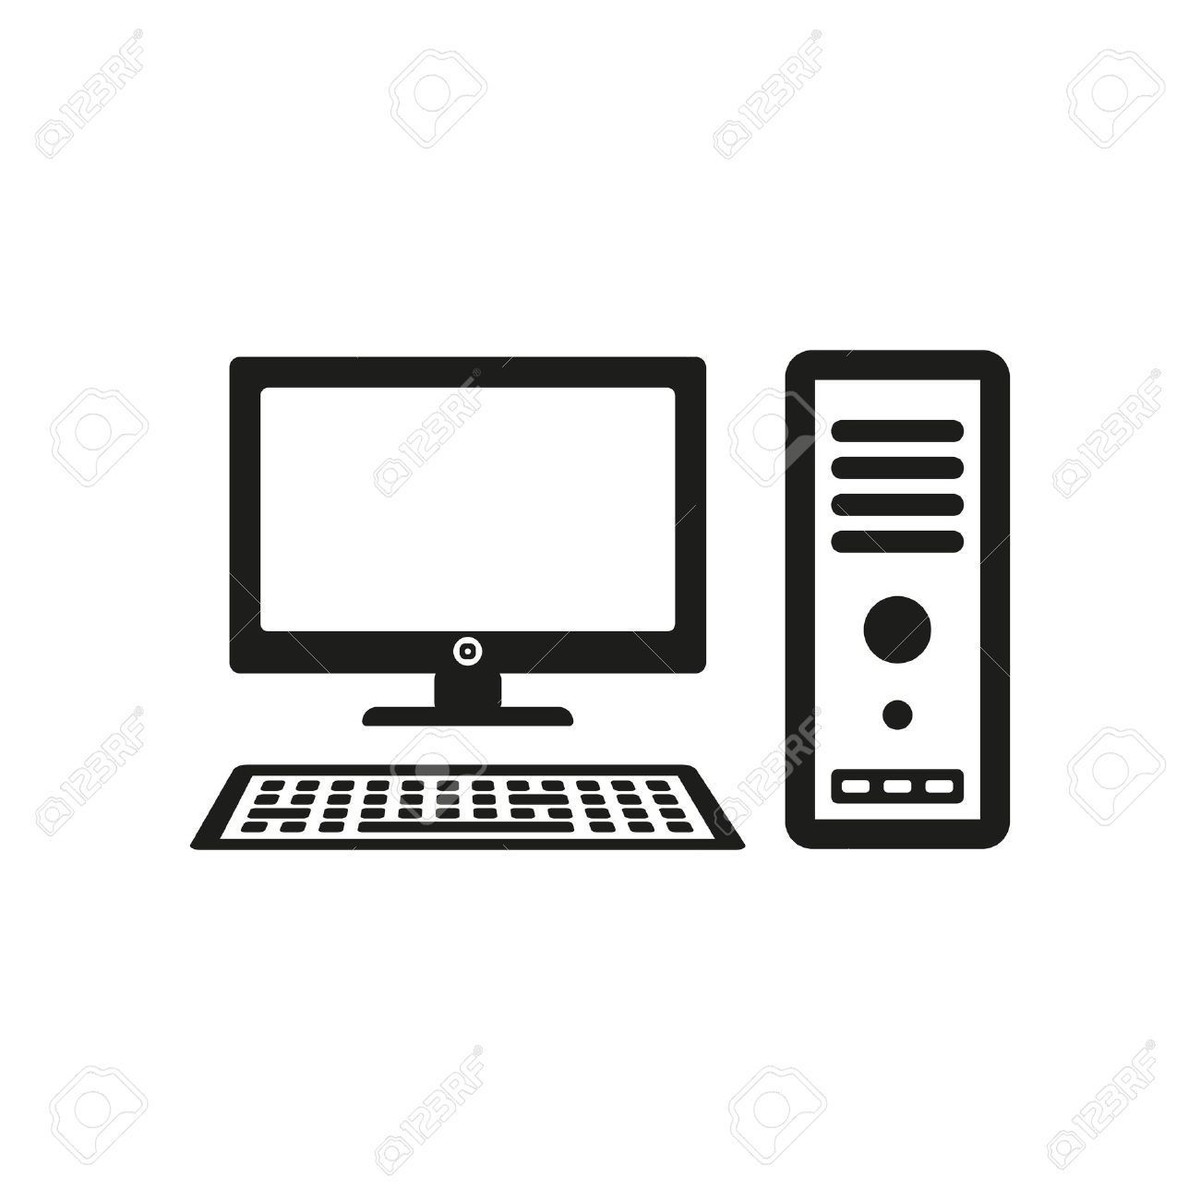 39241146-the-computer-icon-pc-symbol-flat-vector-illustration